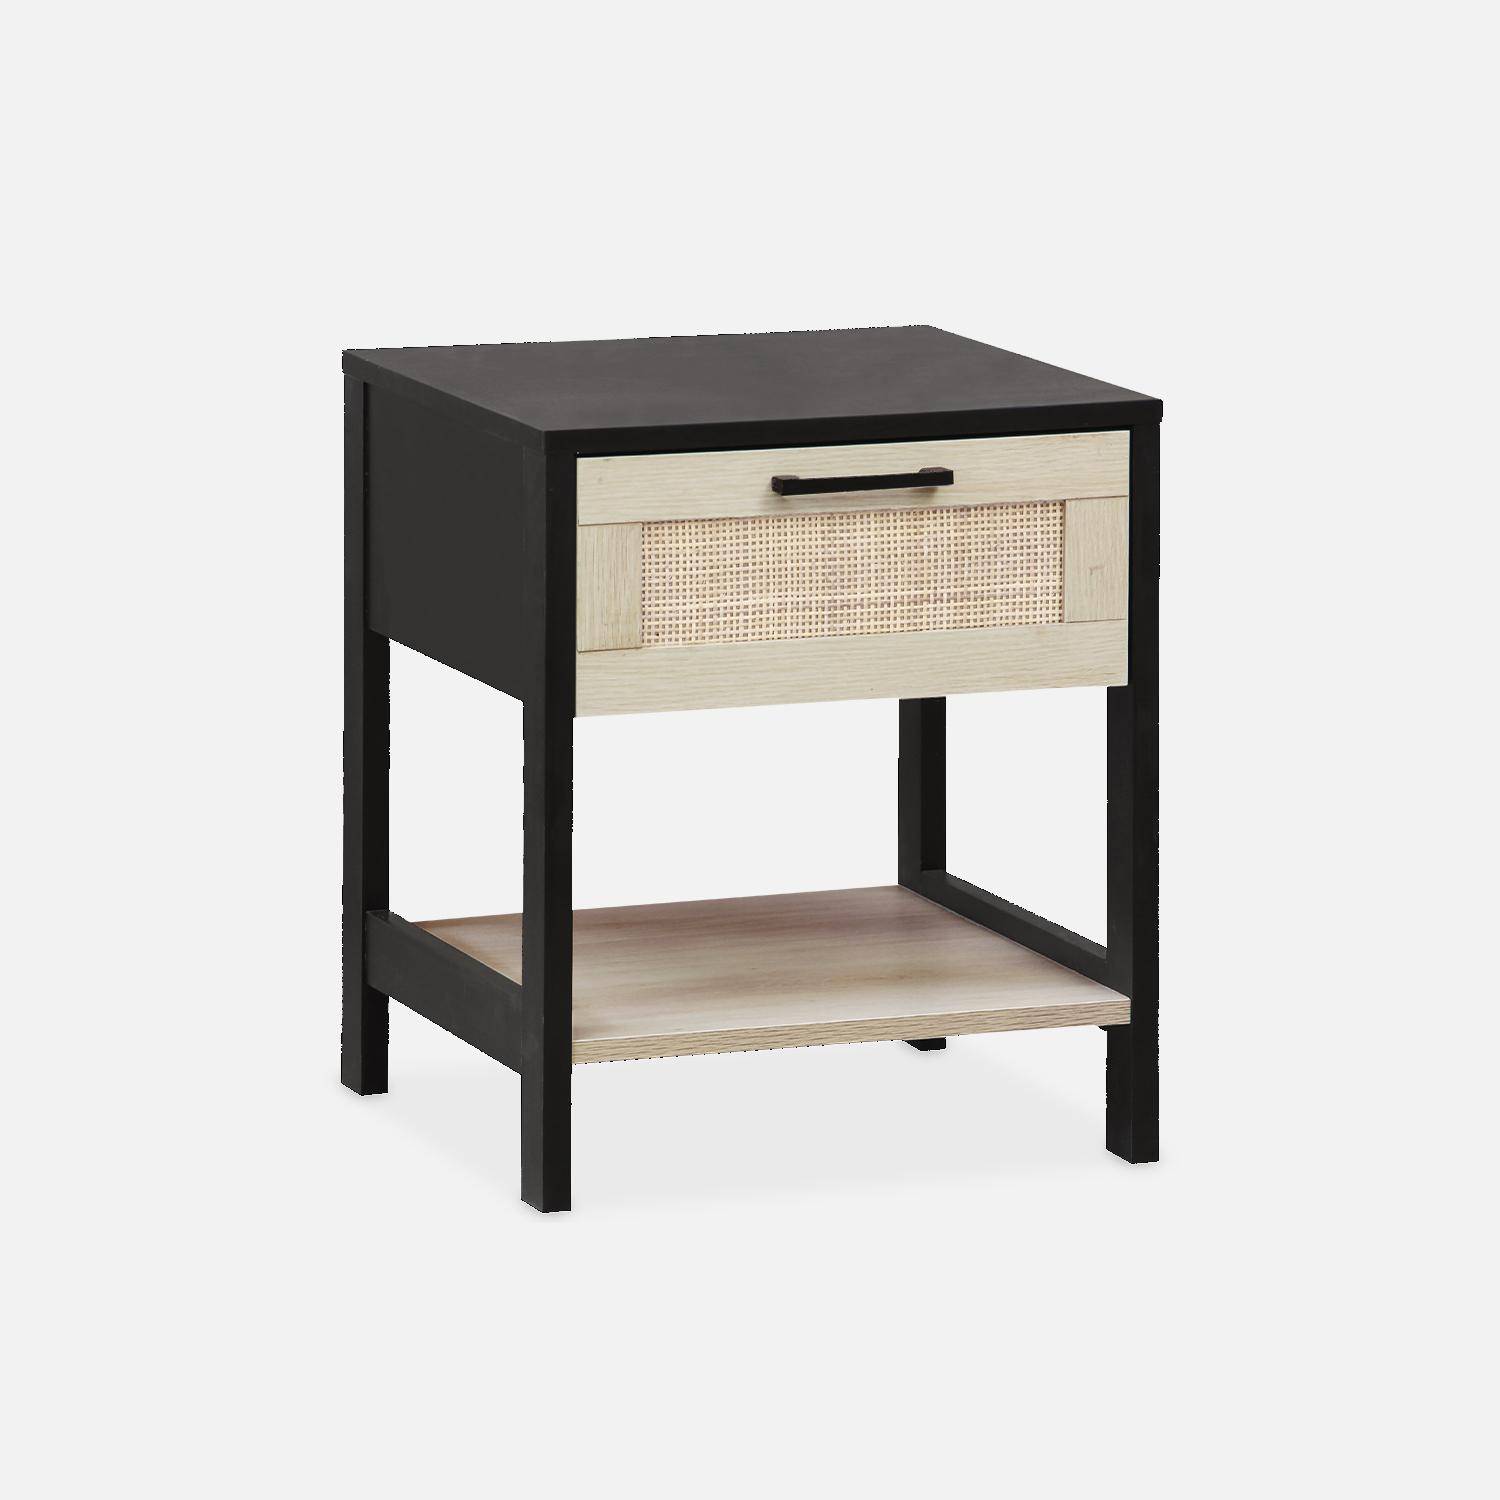 Black and cane bedside table 40 x 40 x 48cm - Bianca - 1 drawer, 1 shelf Photo2